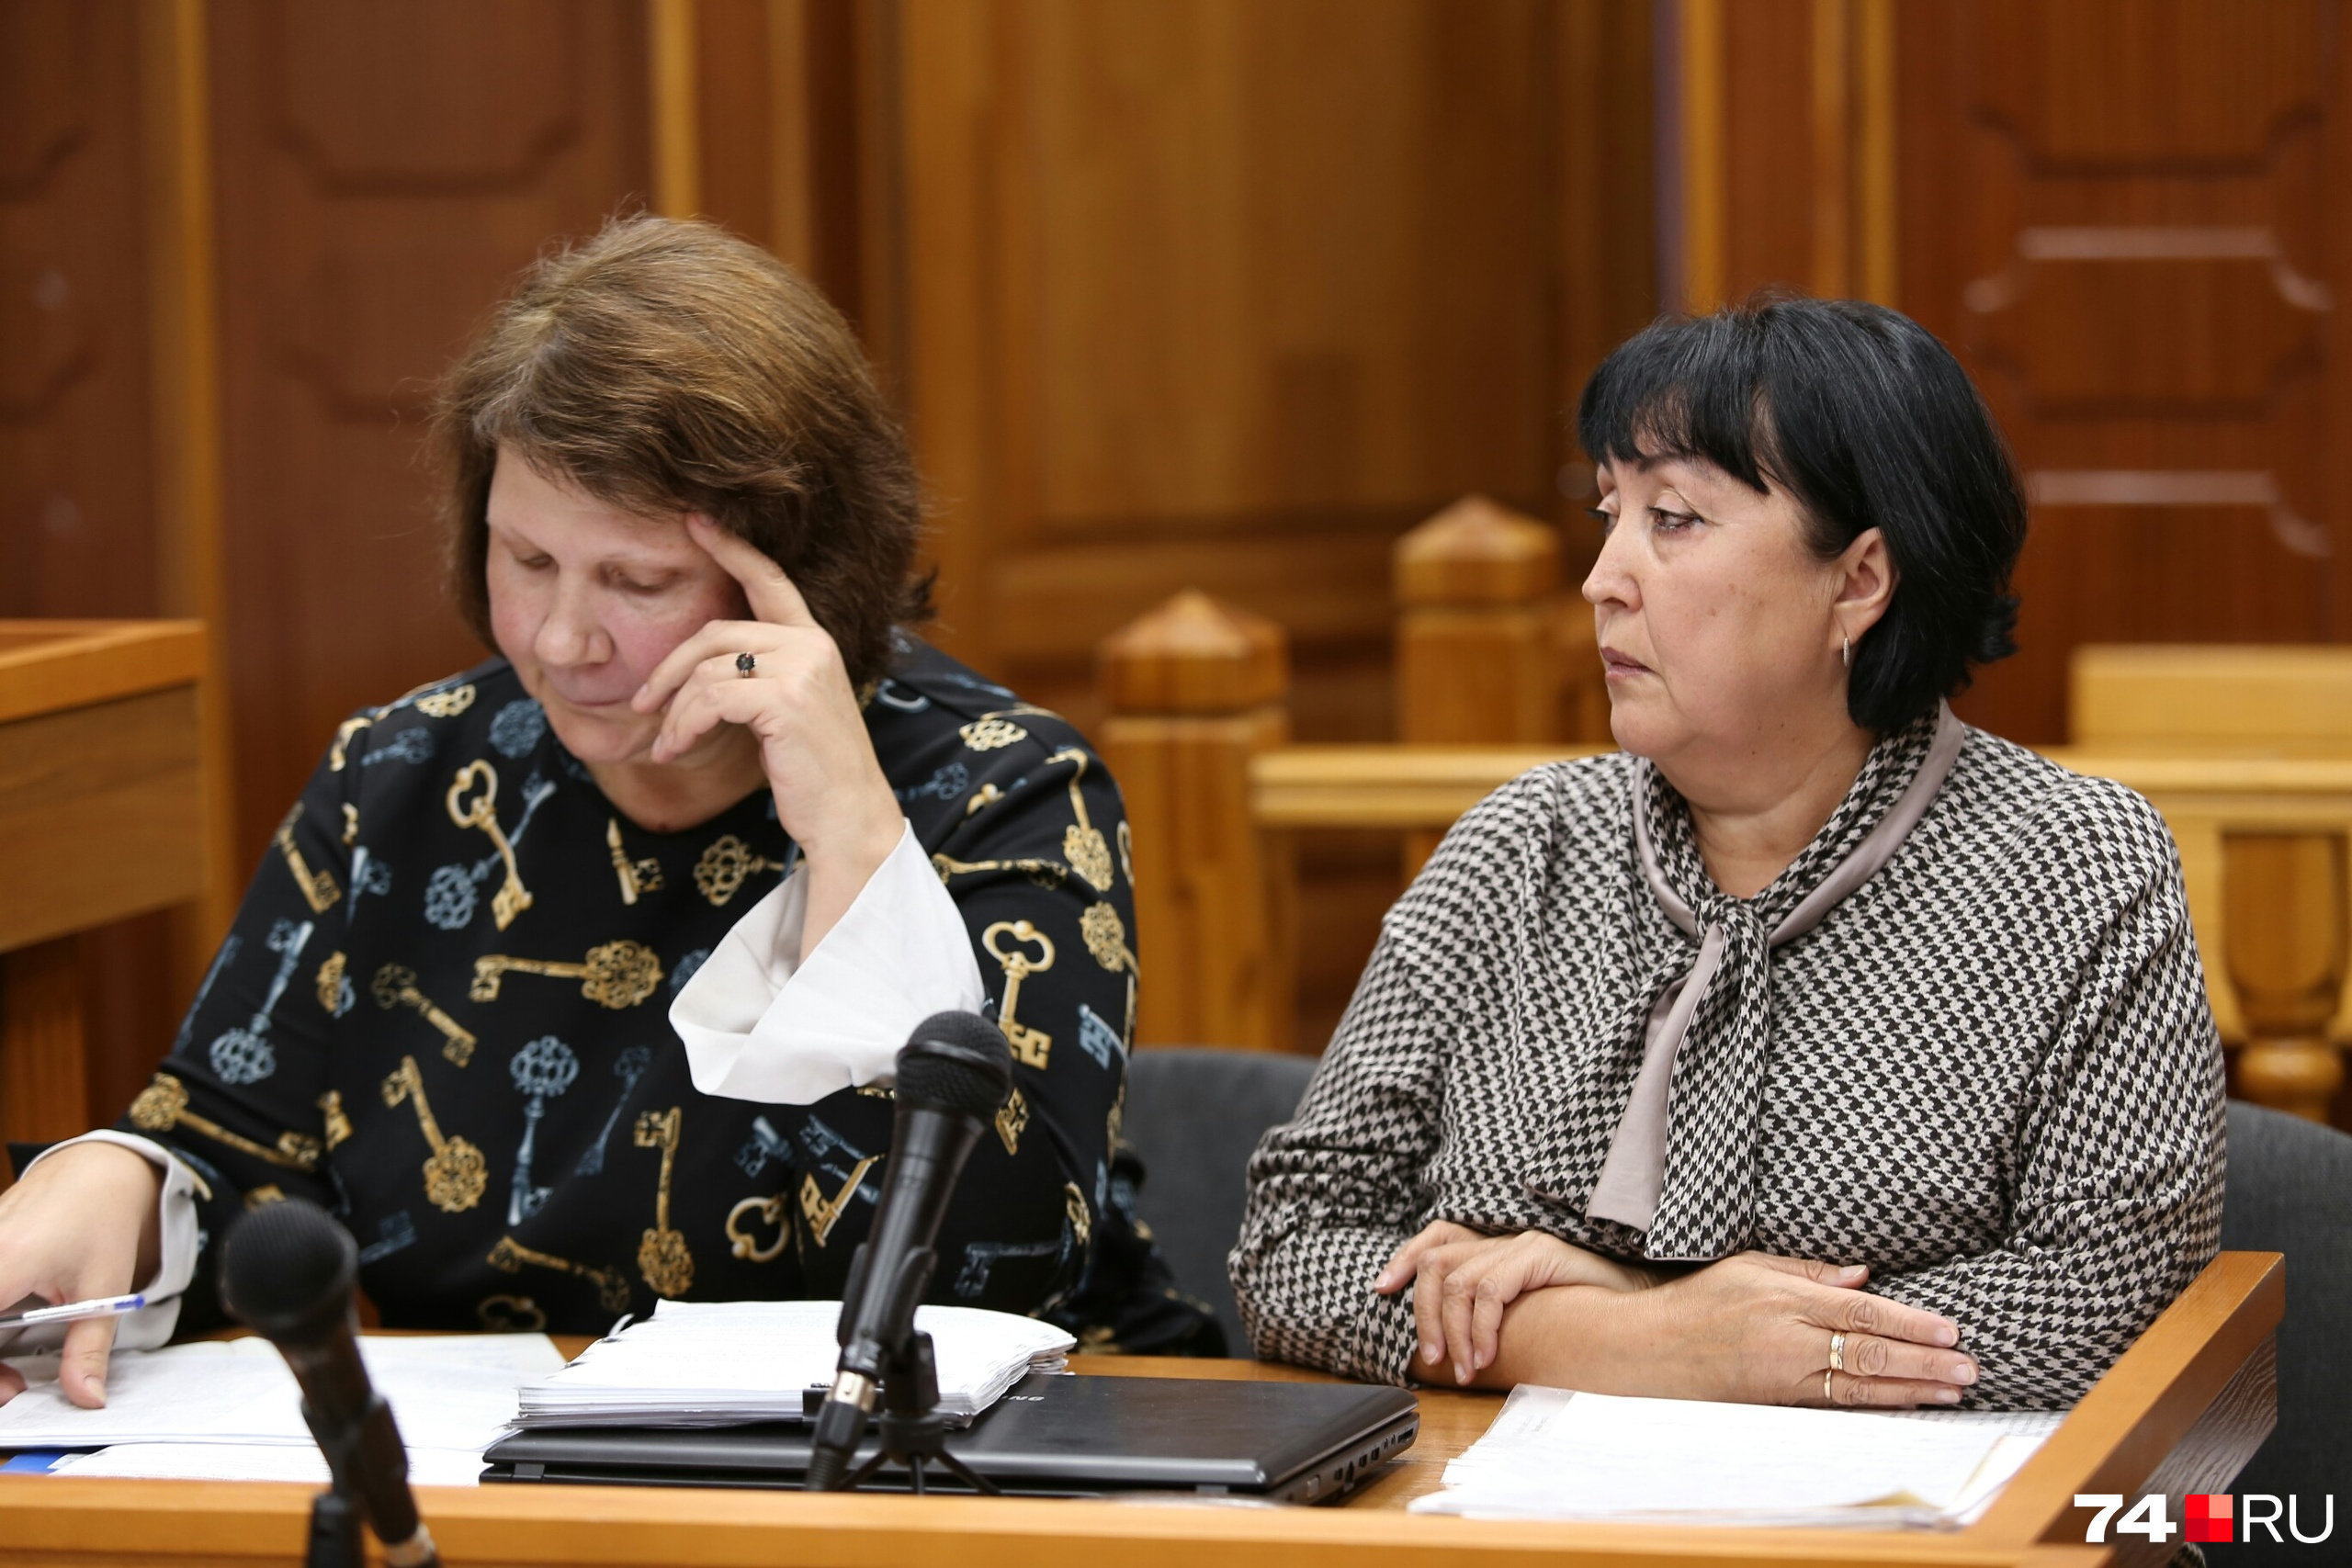 Адвокат педагога и сама Порсева настаивали на оправдательном приговоре